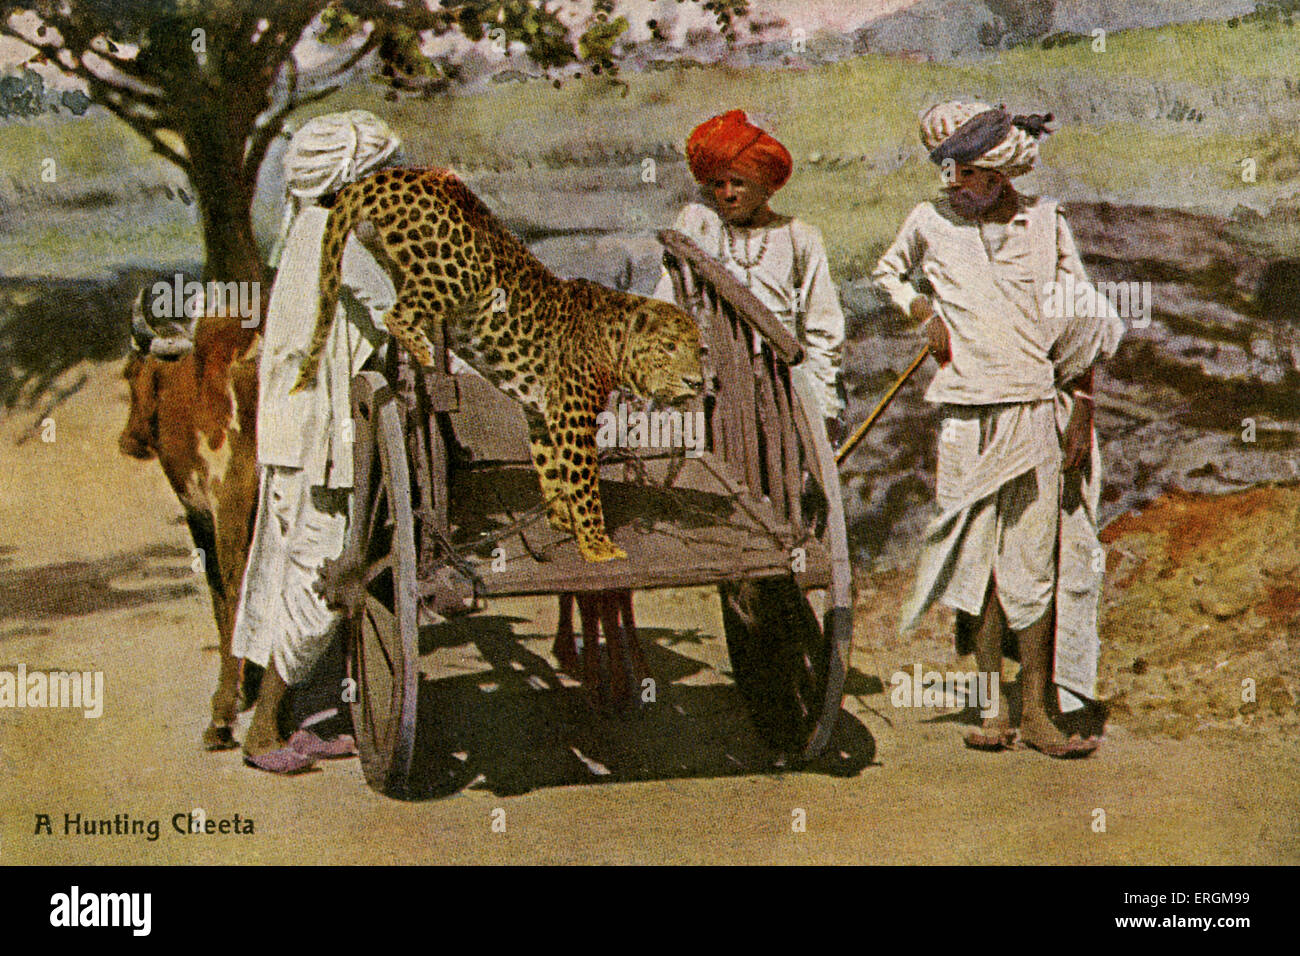 Indian Cheeta encadenado a un carro. Fotografía coloreada de principios del siglo XX. Título dice 'caza' Cheeta. Foto de stock